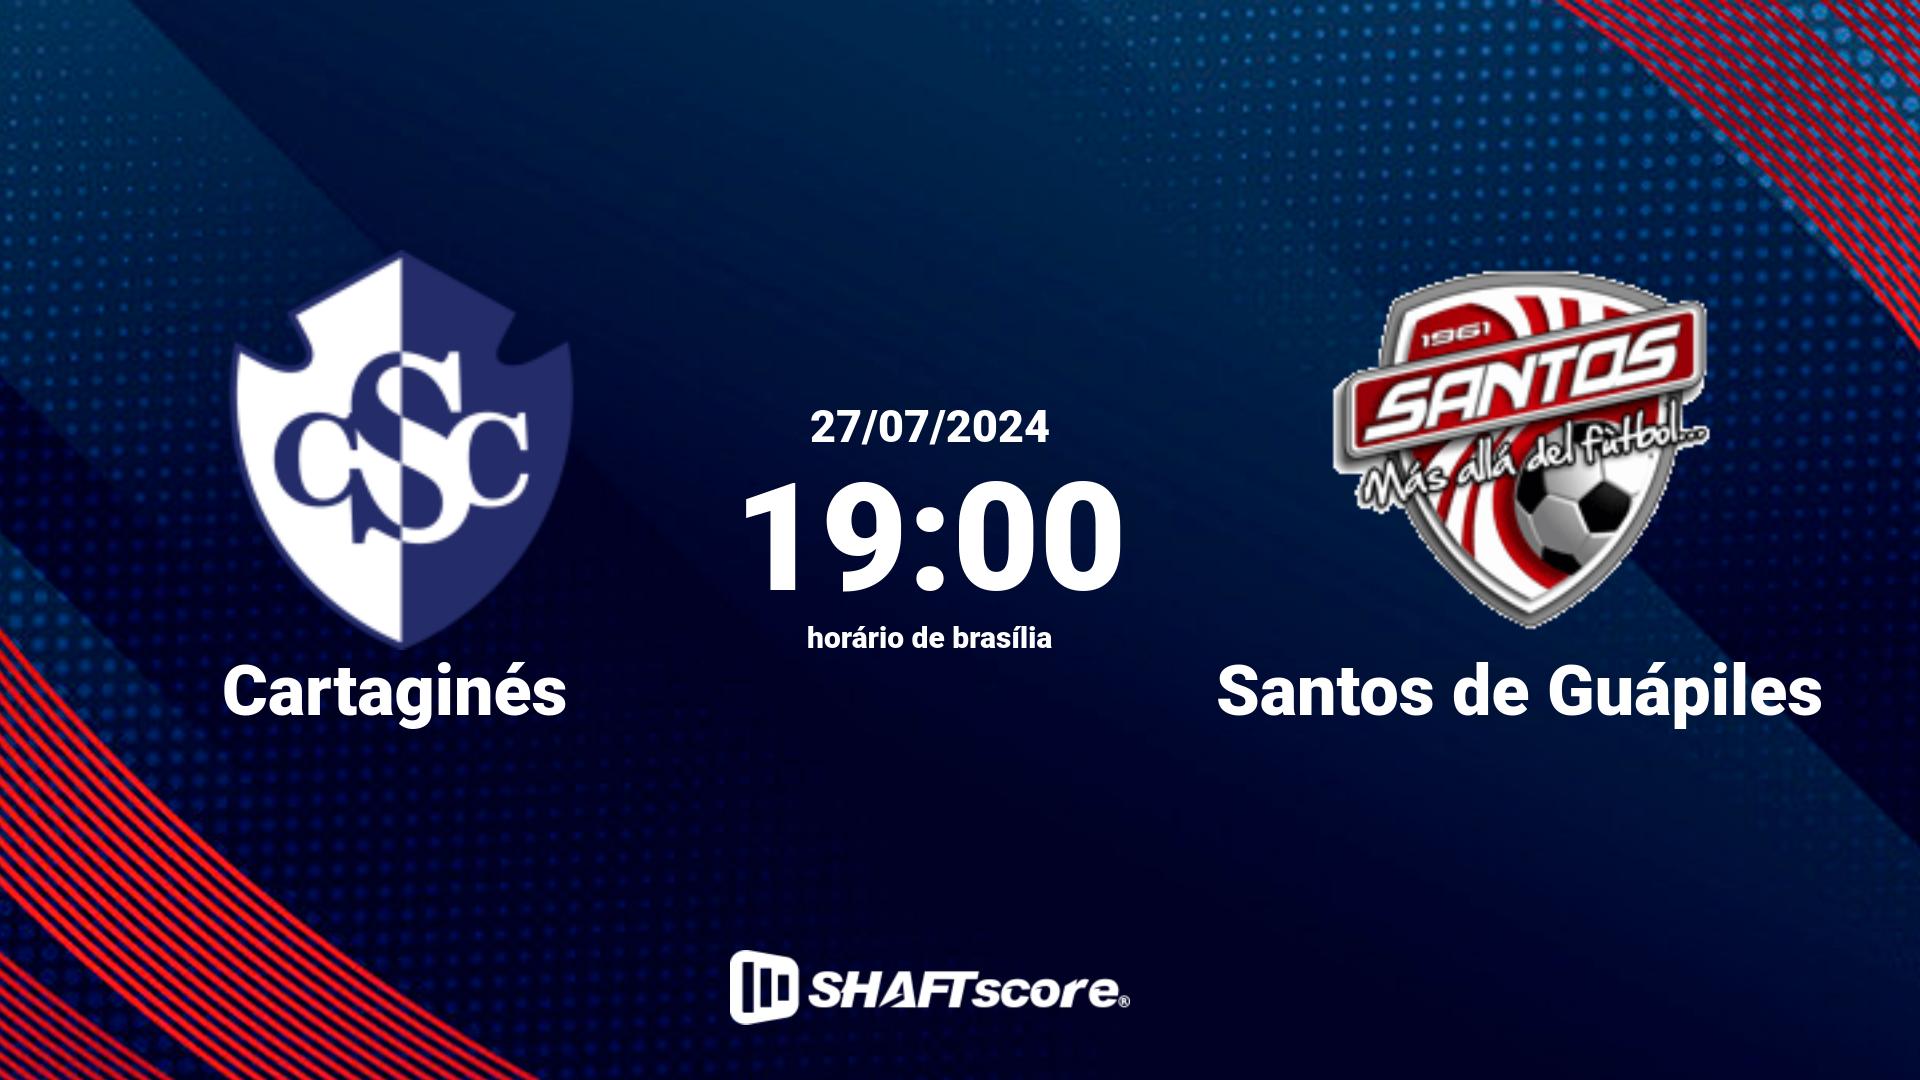 Estatísticas do jogo Cartaginés vs Santos de Guápiles 27.07 19:00